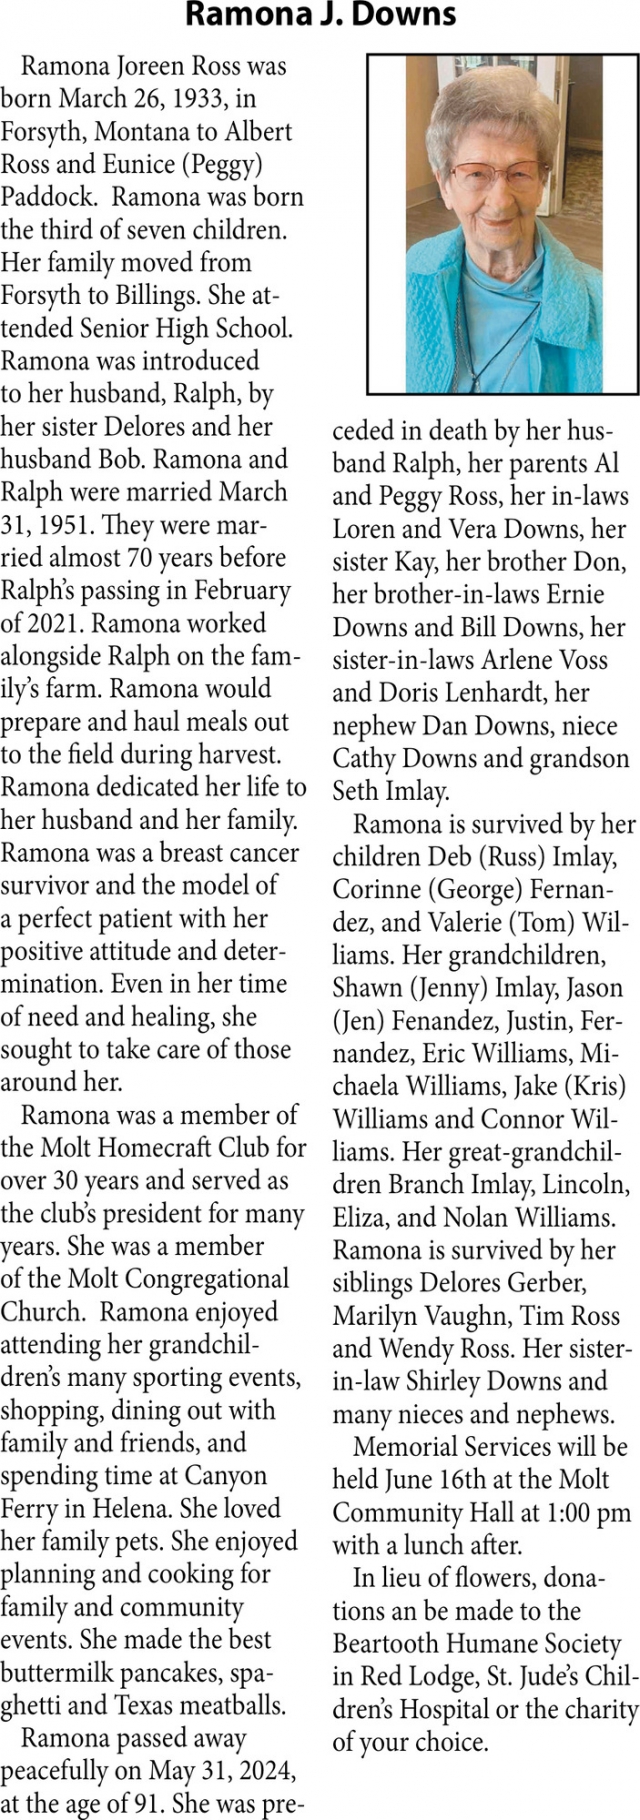 Remona J. Downs, Obituaries, Glendive, MT